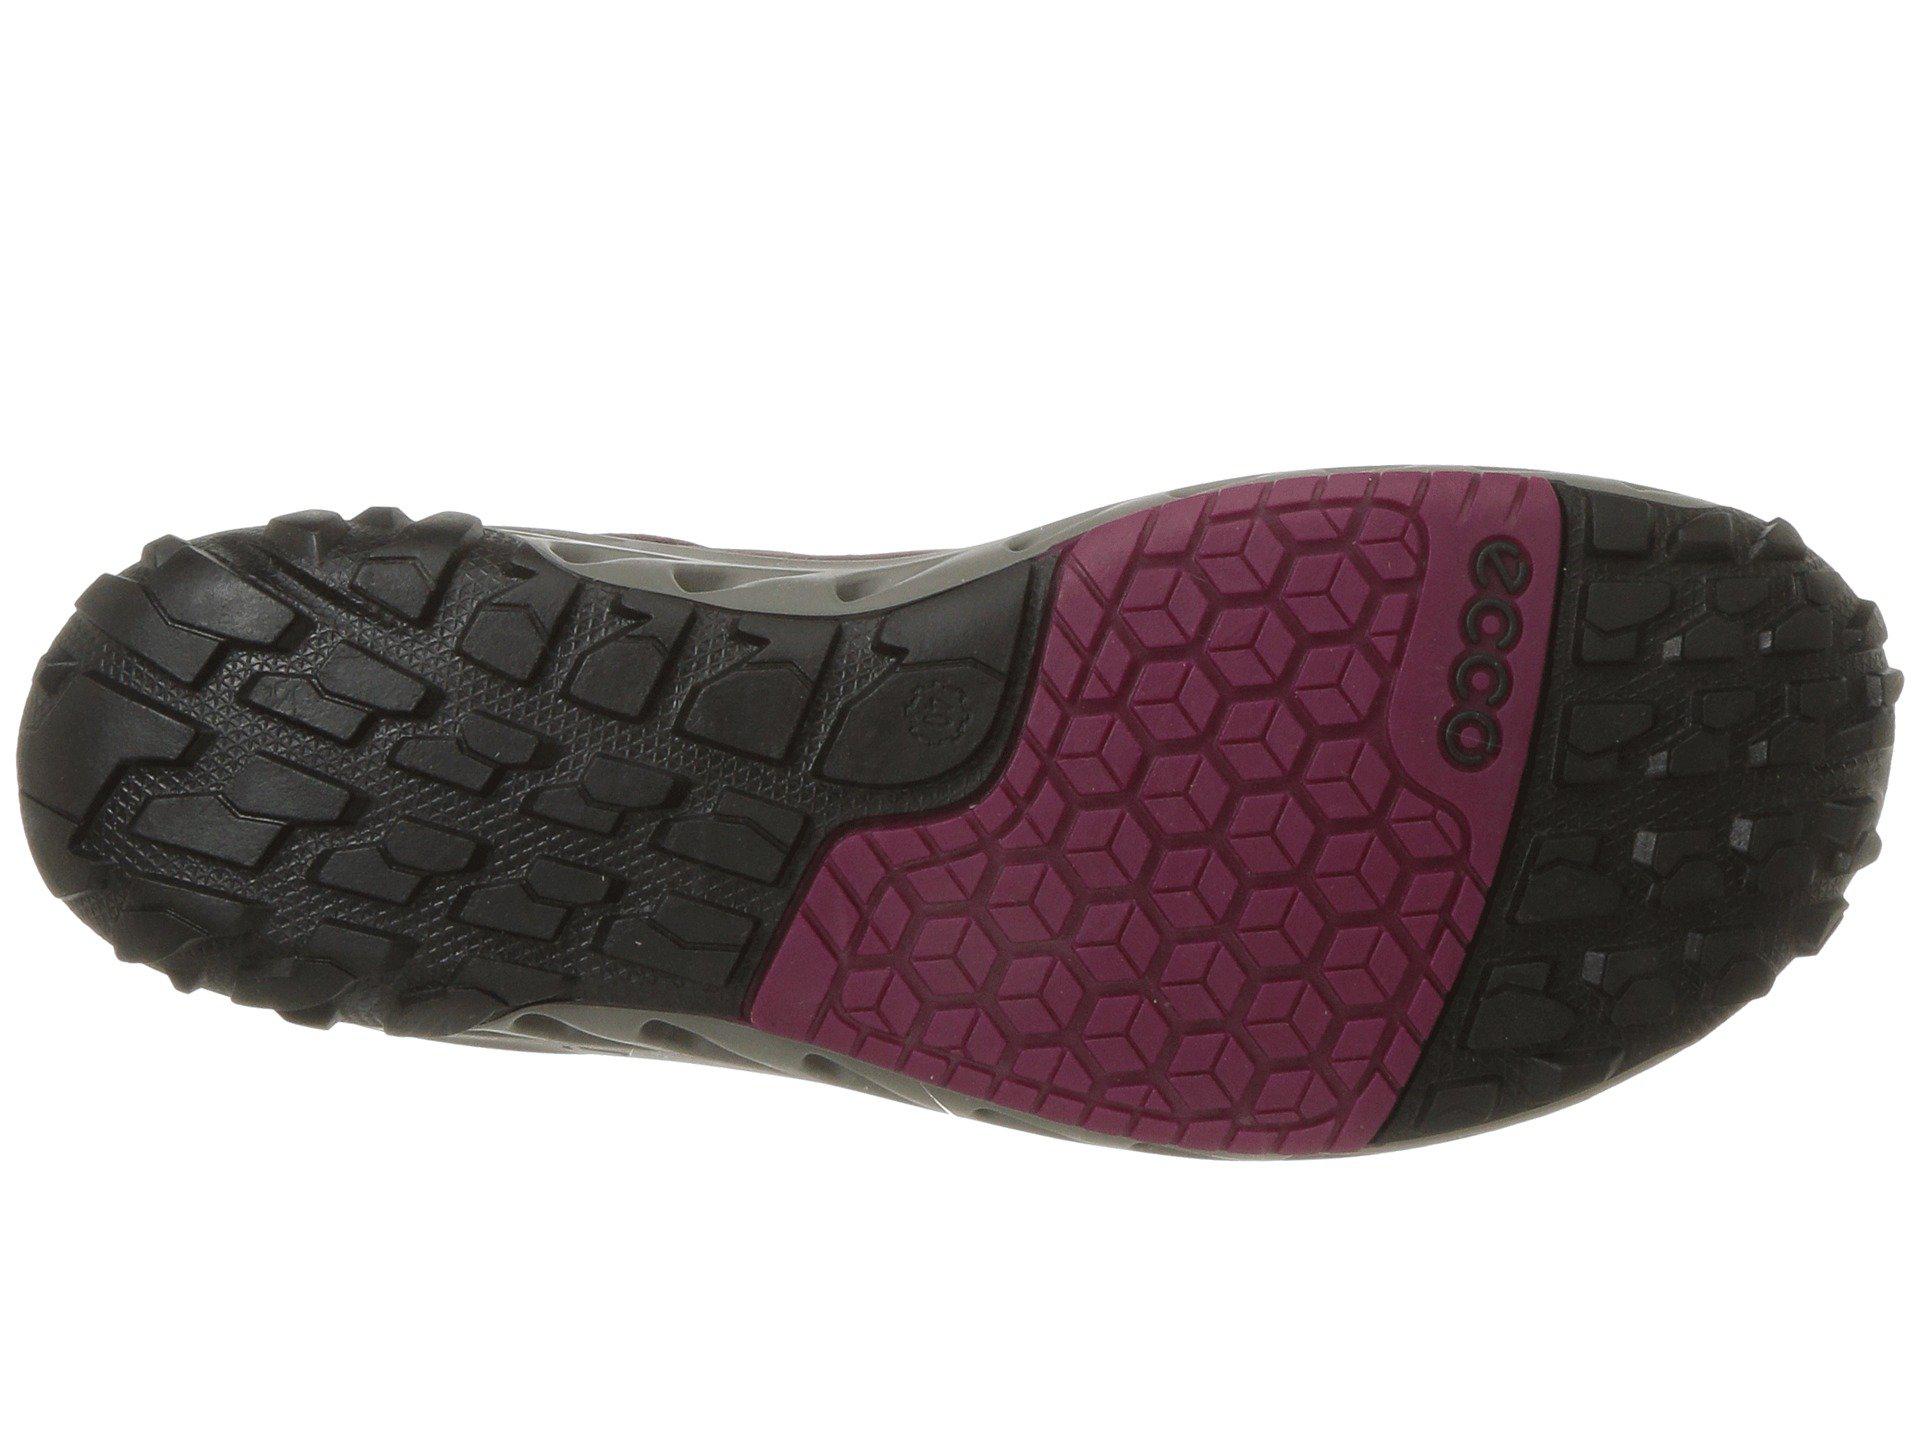 Ecco Leather Biom Venture Gtx Tie (wine) Running Shoes in Purple - Lyst